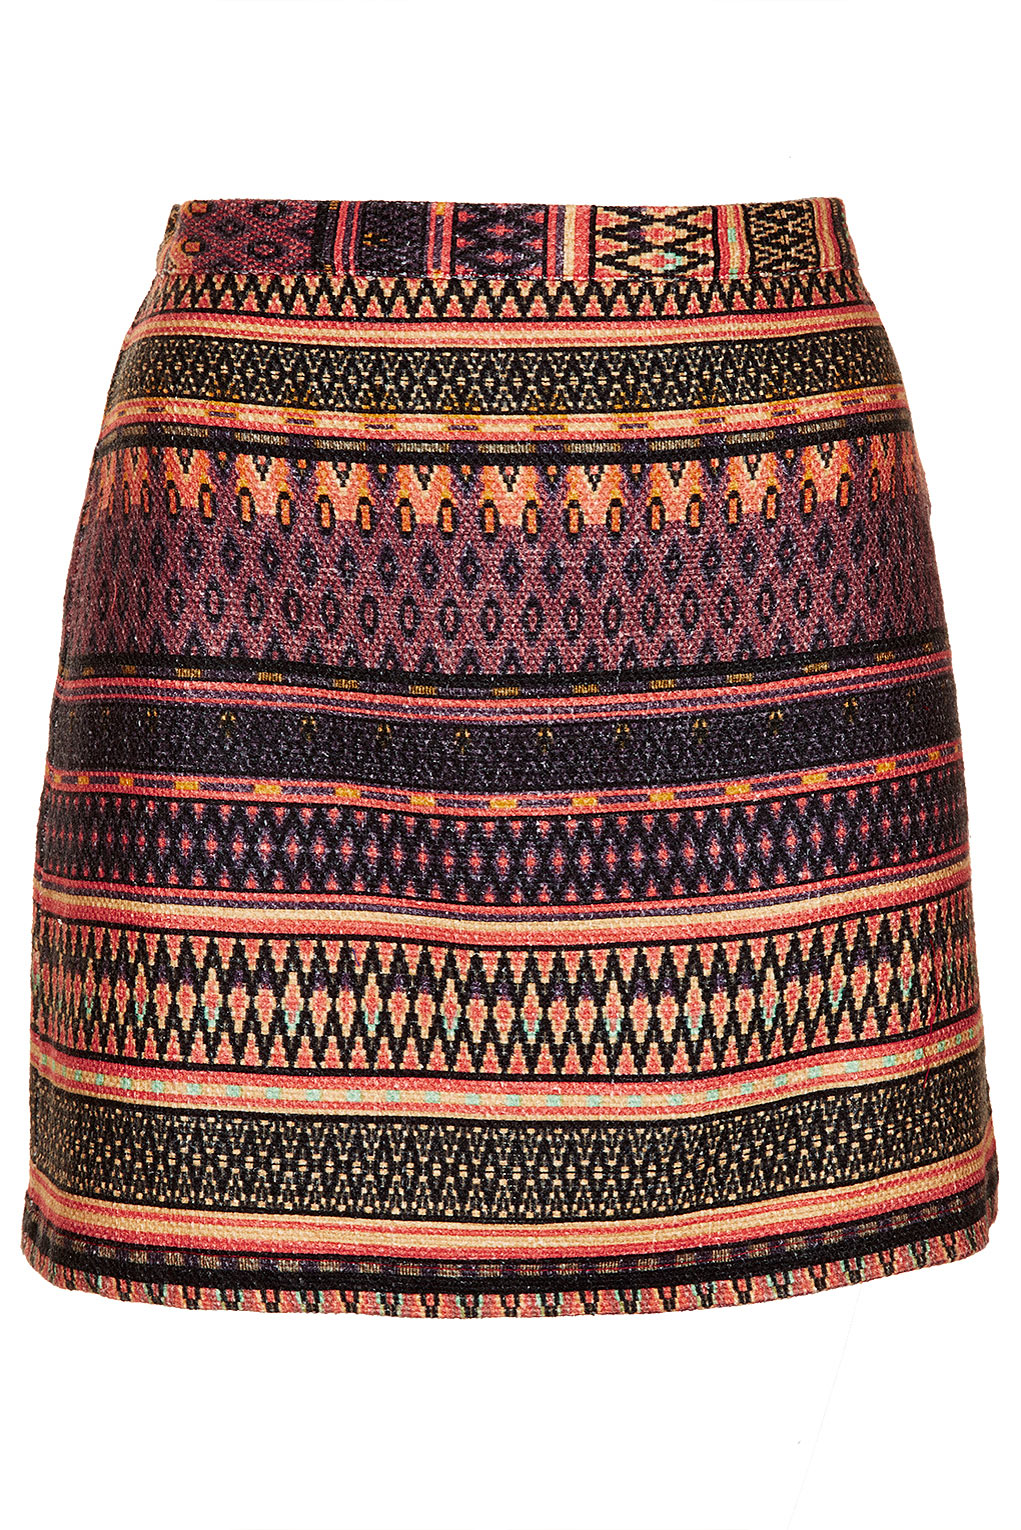 Lyst - Topshop Safari Ikat A-Line Skirt